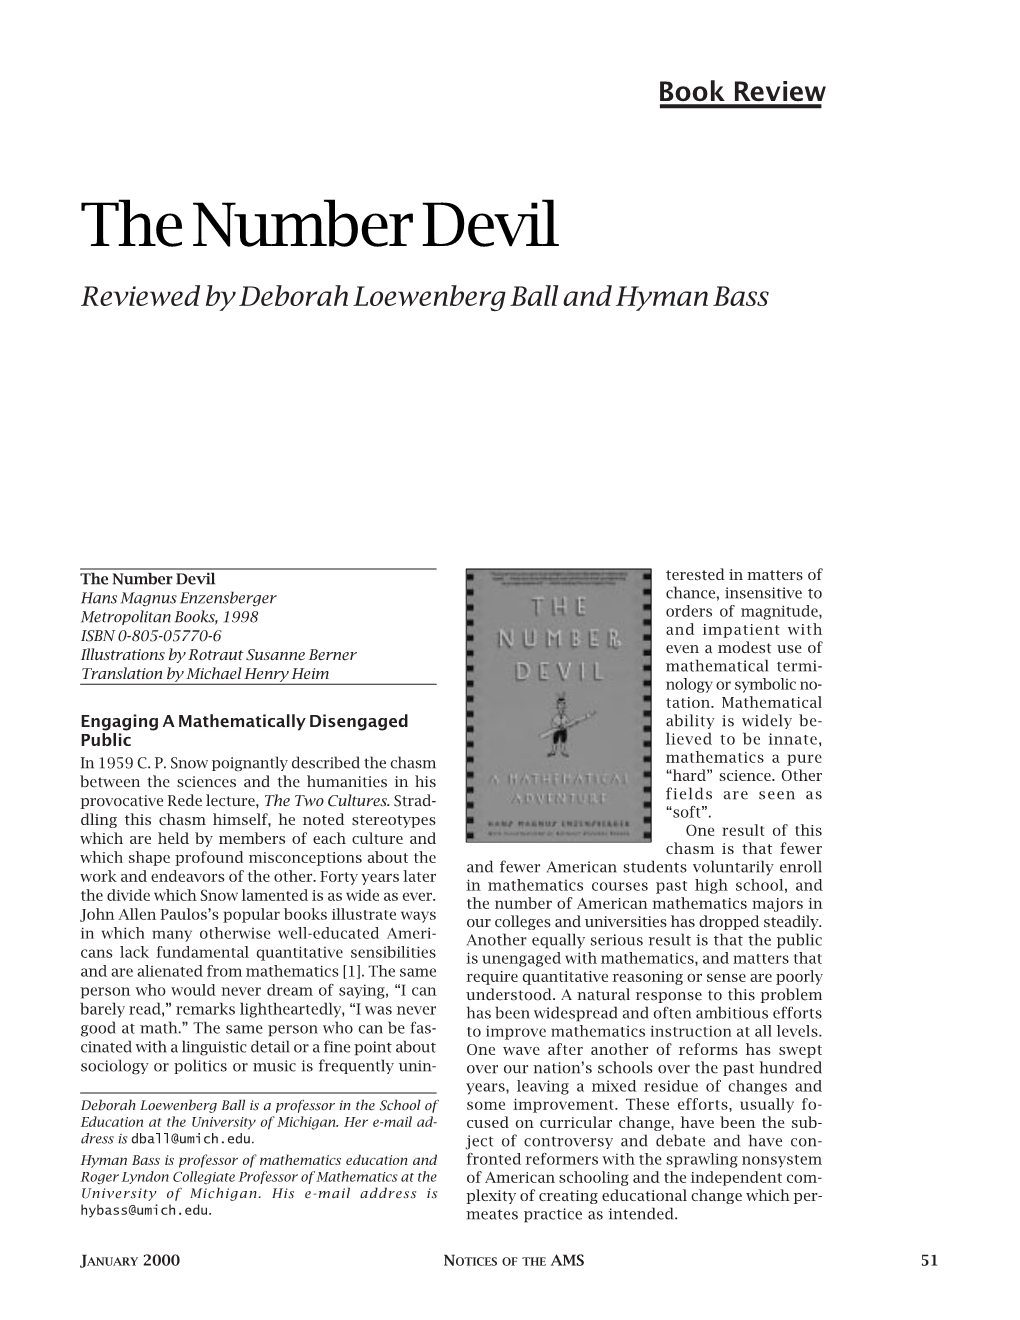 Book Review: the Number Devil, Volume 47, Number 1